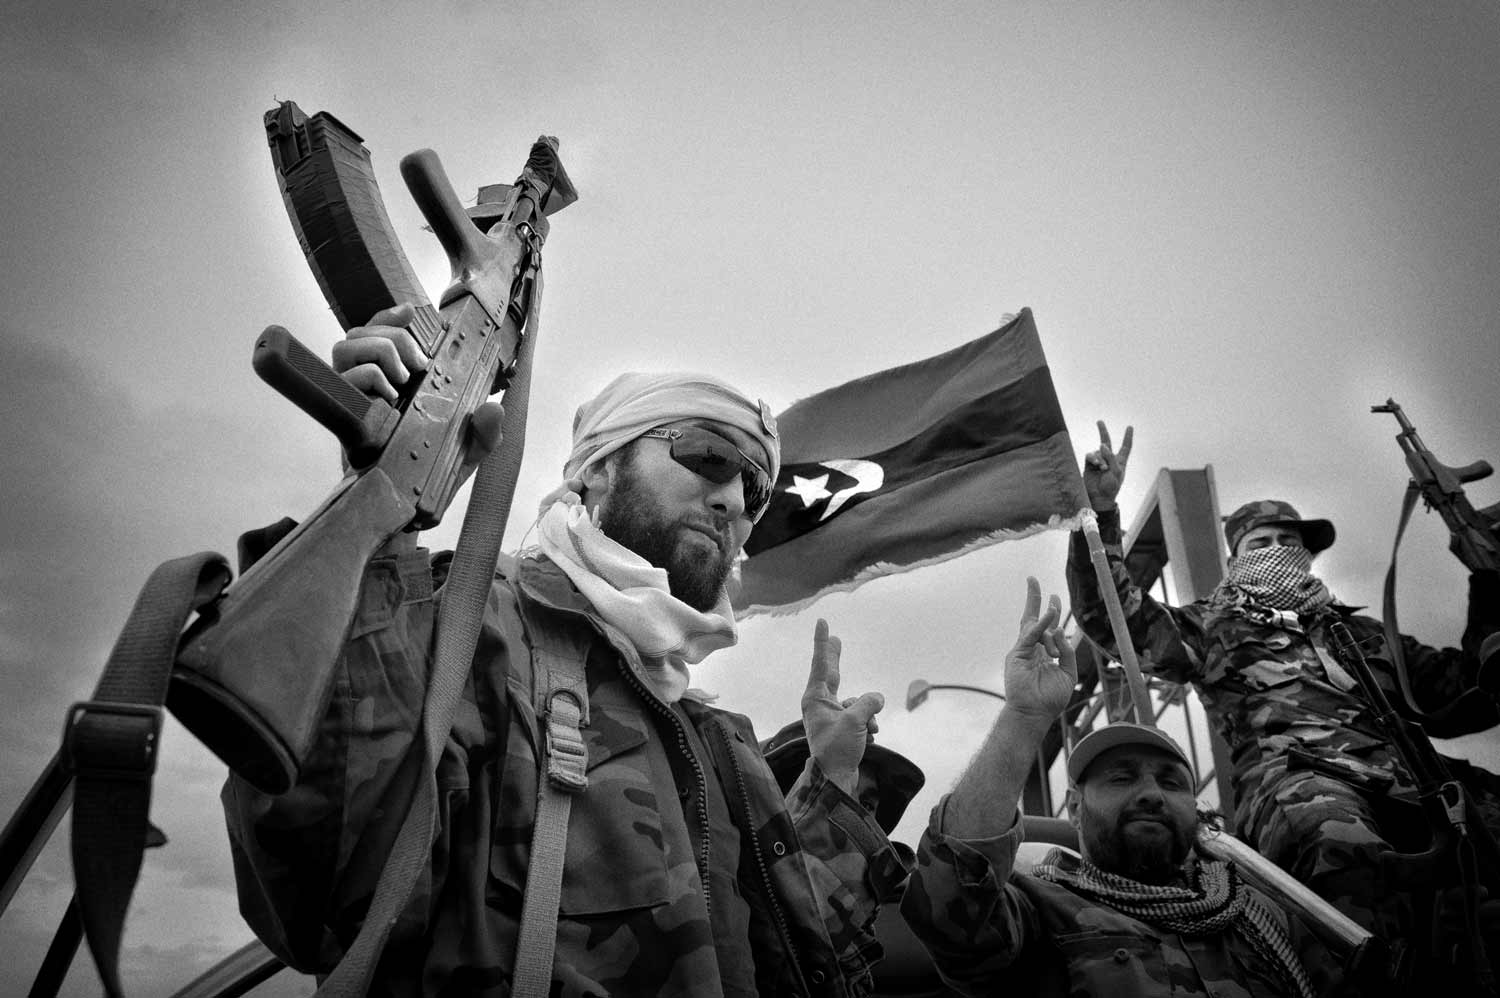 Rebel fighters, Western Gate, Adjdabiya